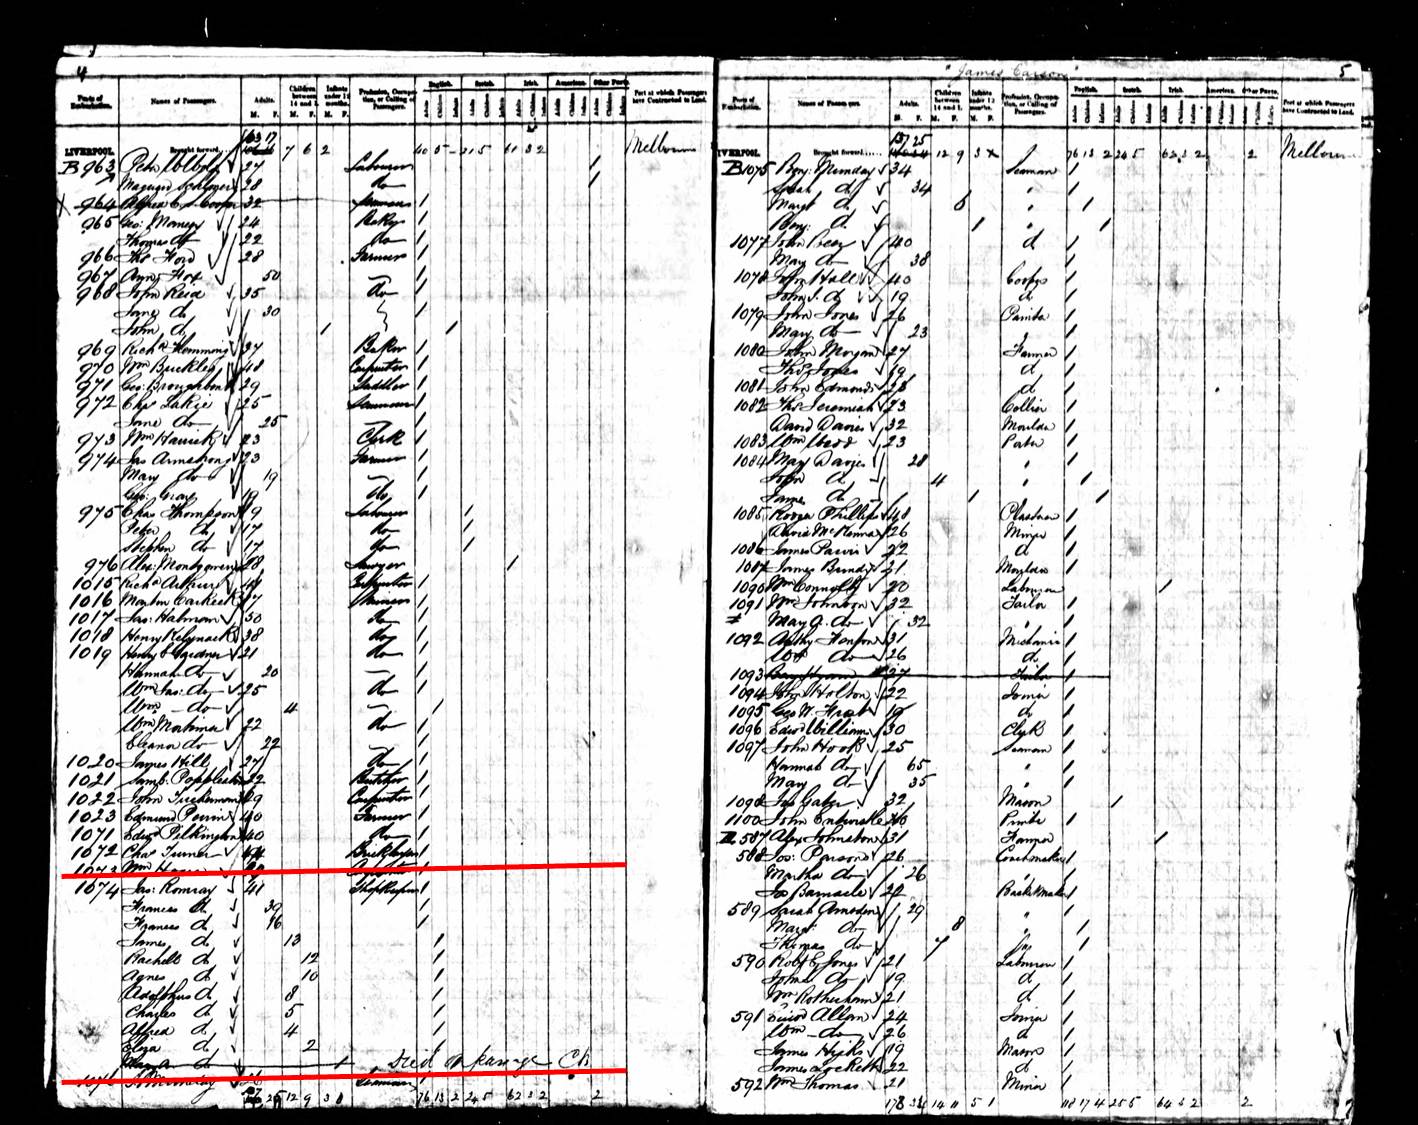 1854 James Carson passenger list